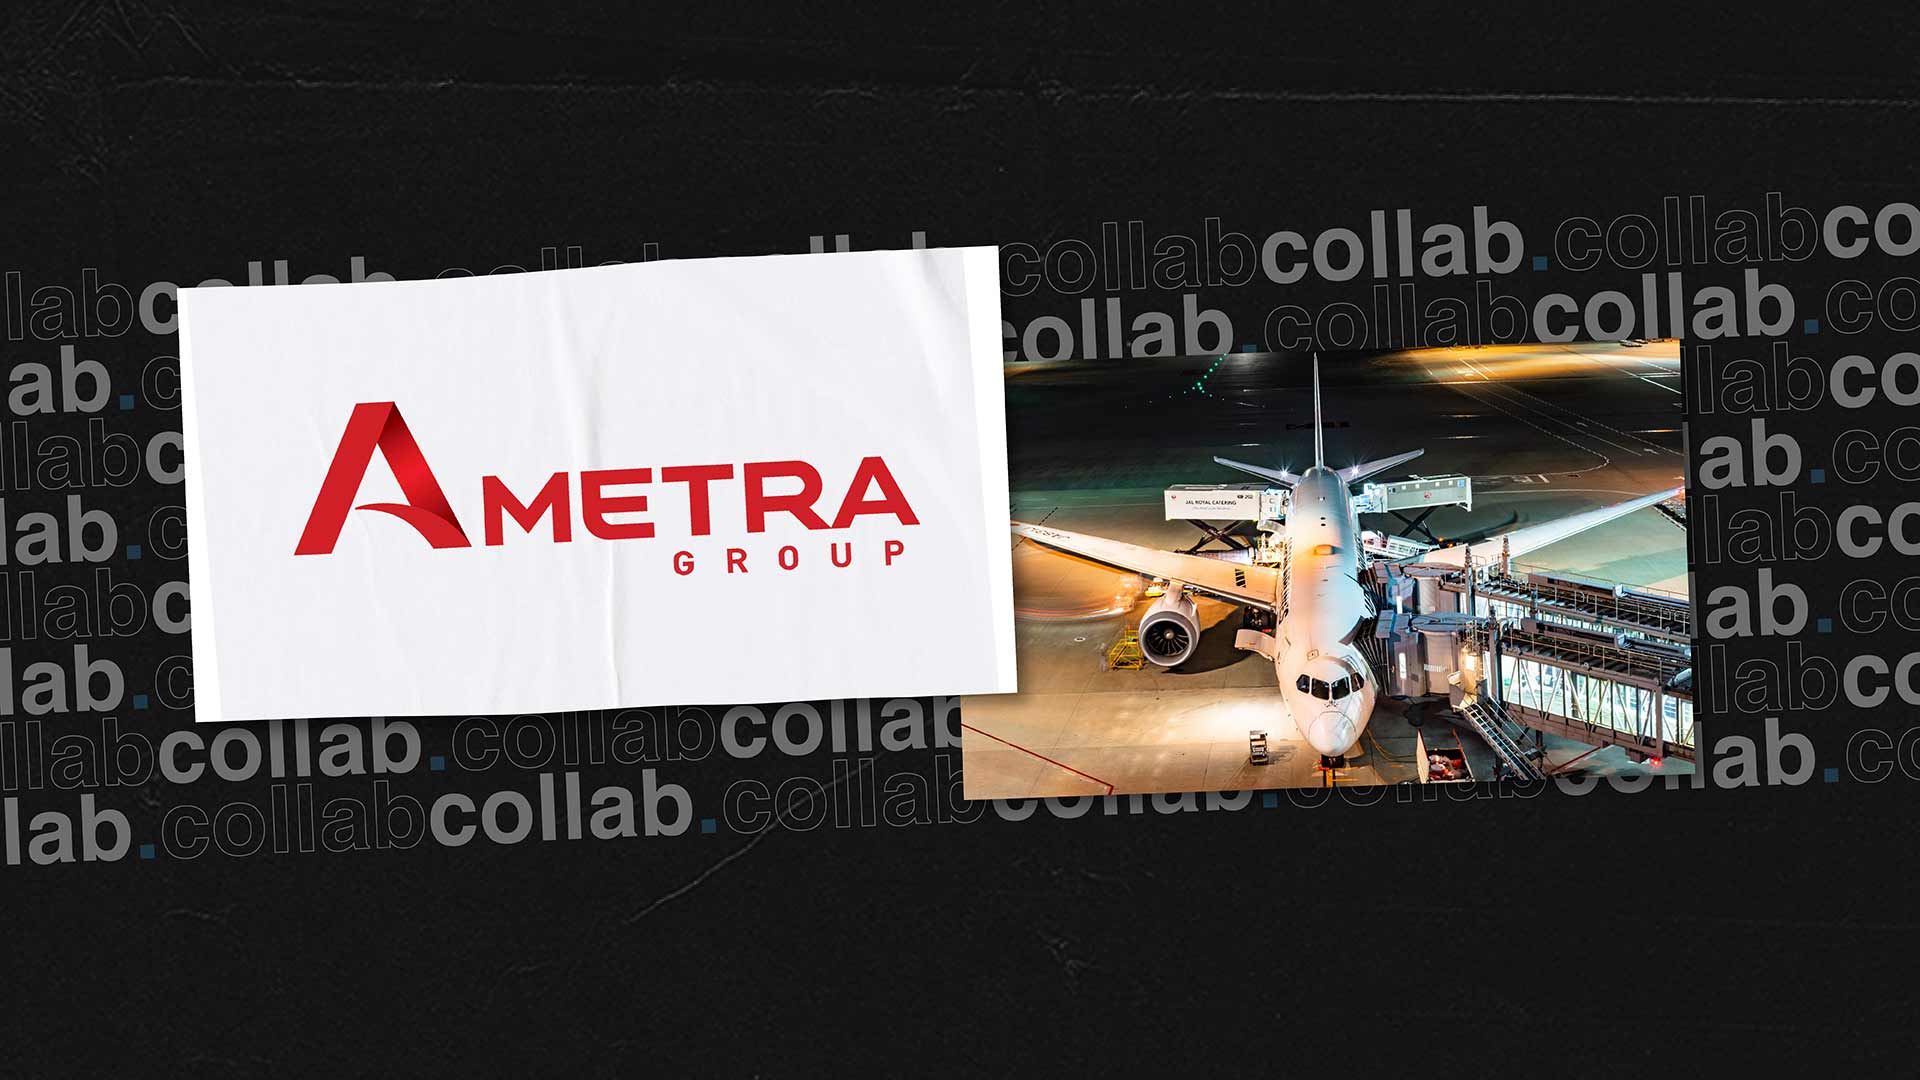 collaboration ametra group